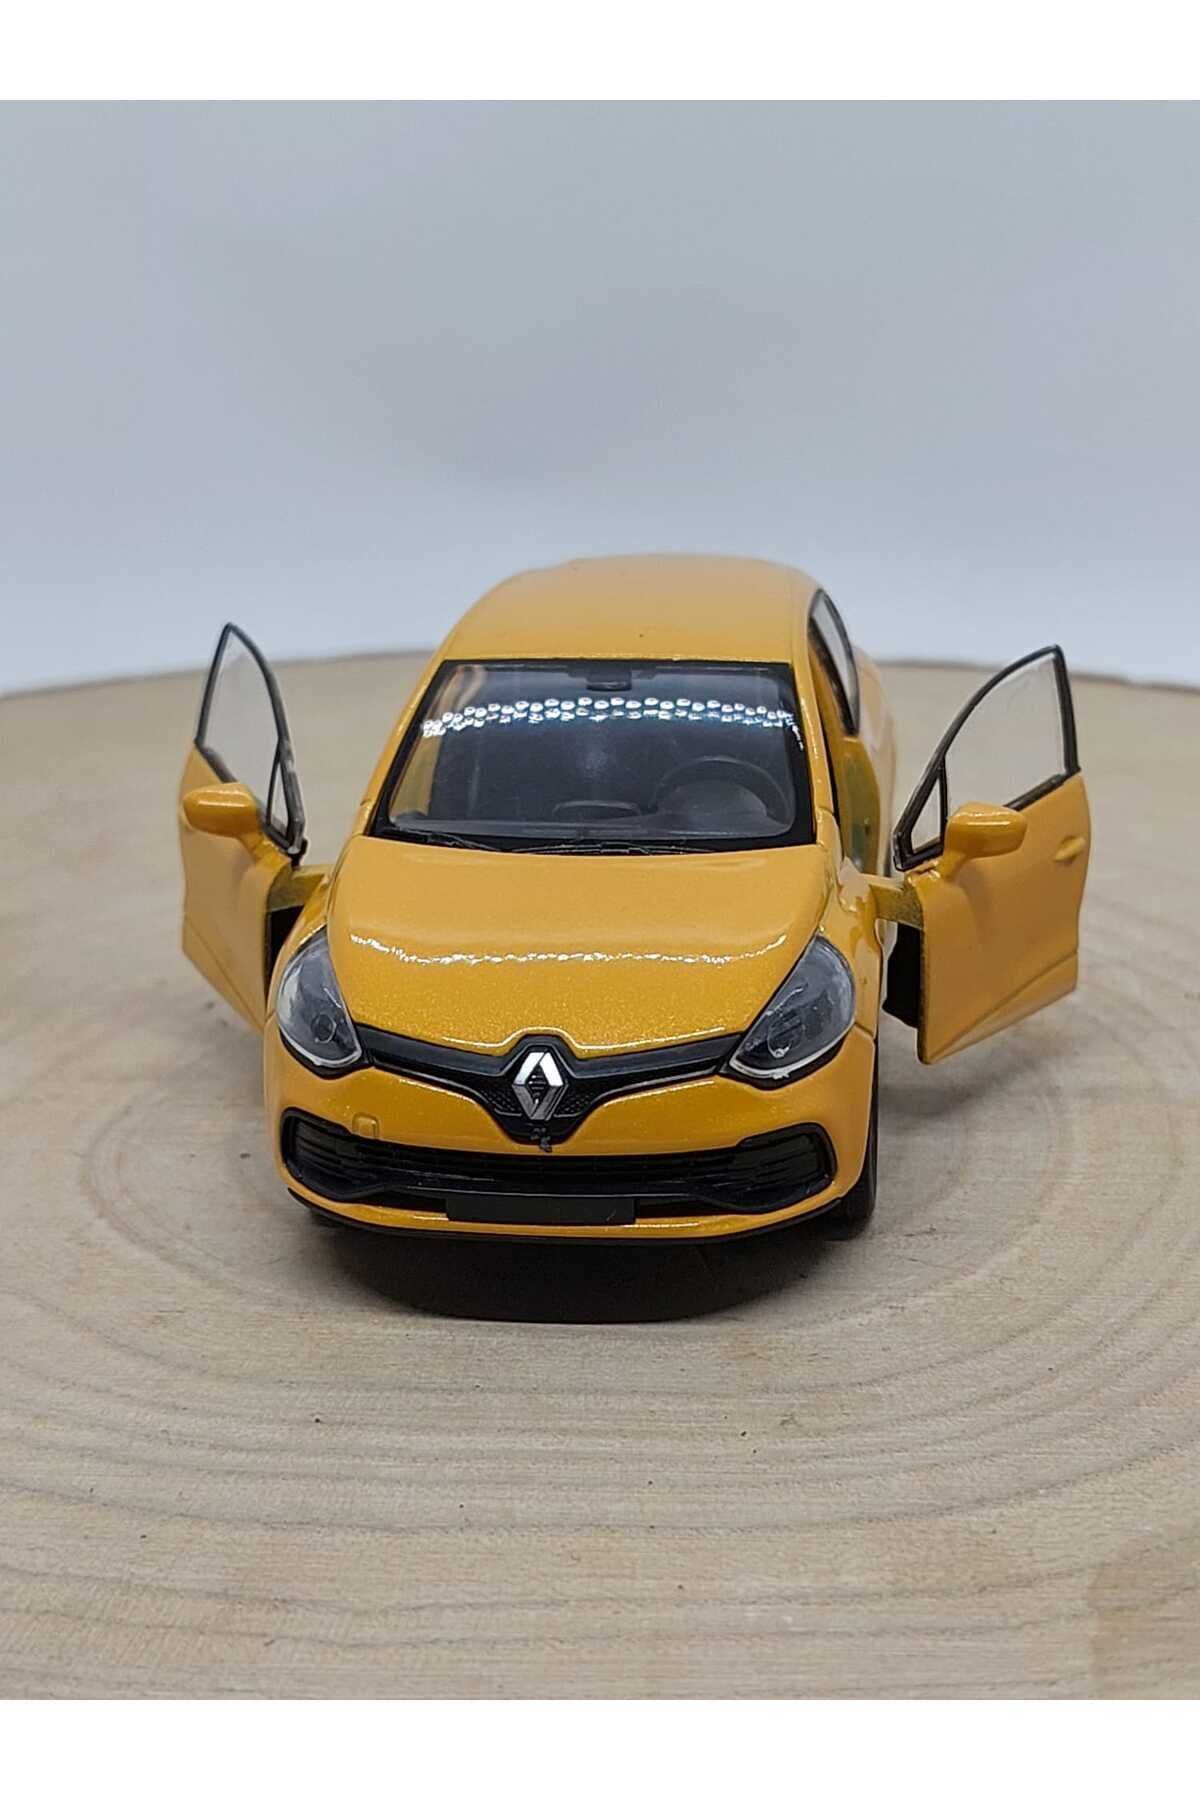 MODEL MAKET Renault Clio 4 çek bırak metal araba